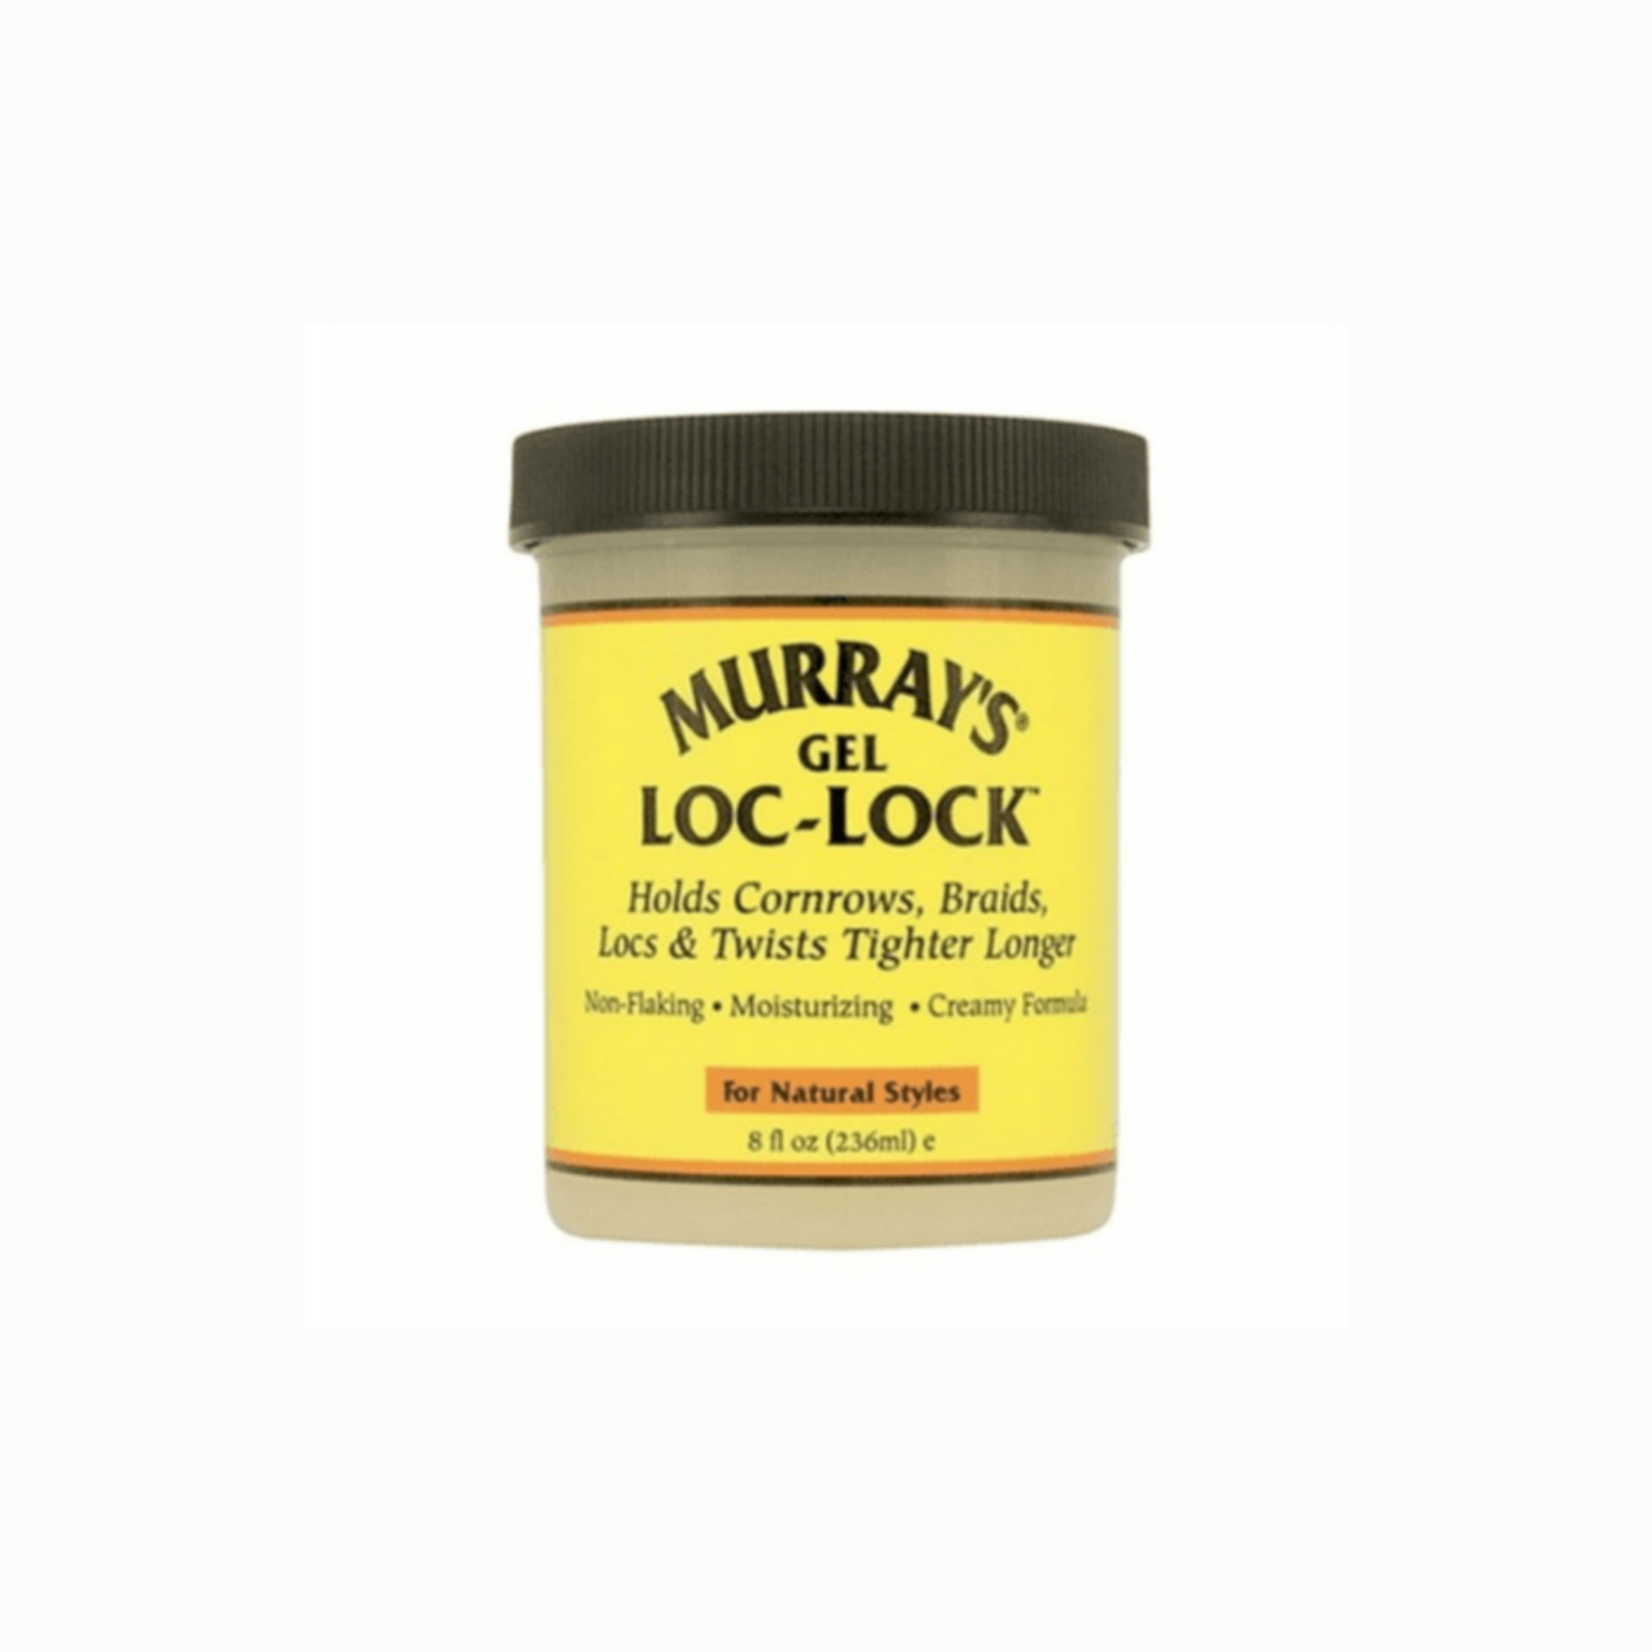 MURRAY'S Murray's Gel Loc-Lock